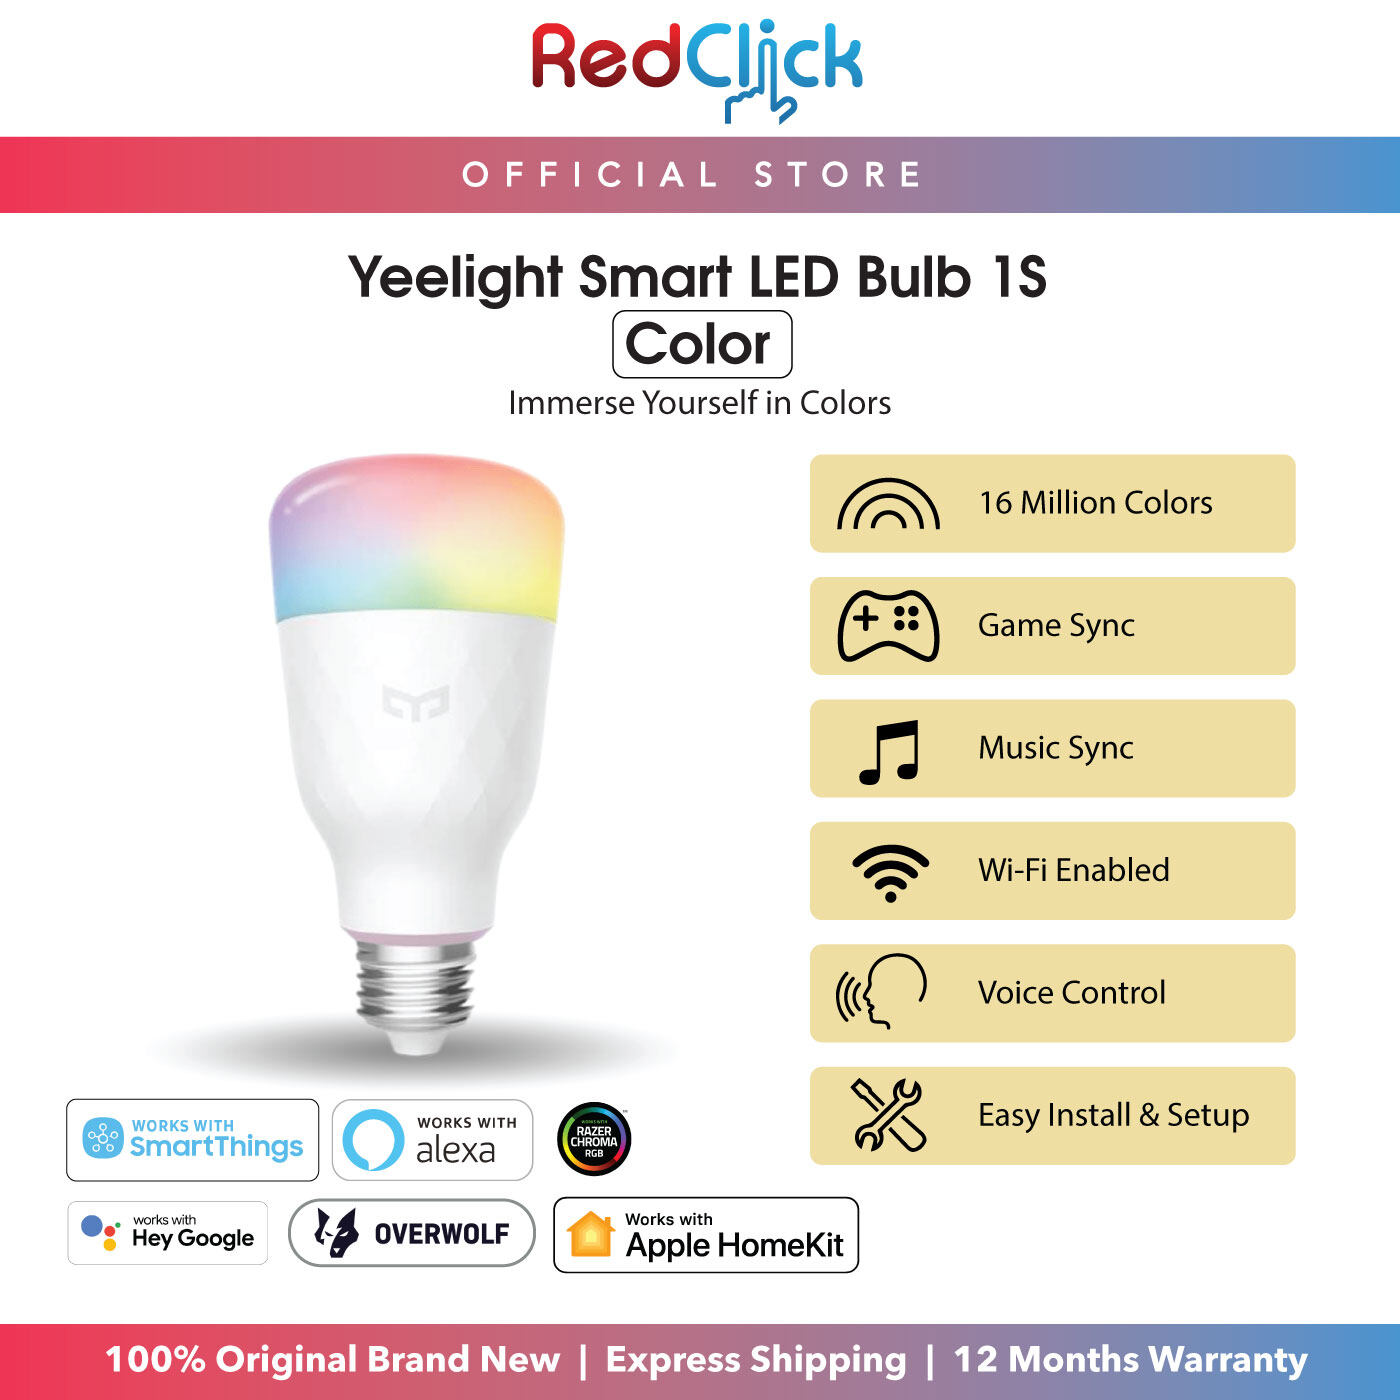 Yeelight Smart LED Bulb 1S 16M Colors Musics Sync Energy Saving Low Power Consumption Easy Setup Support Smart Home App Control